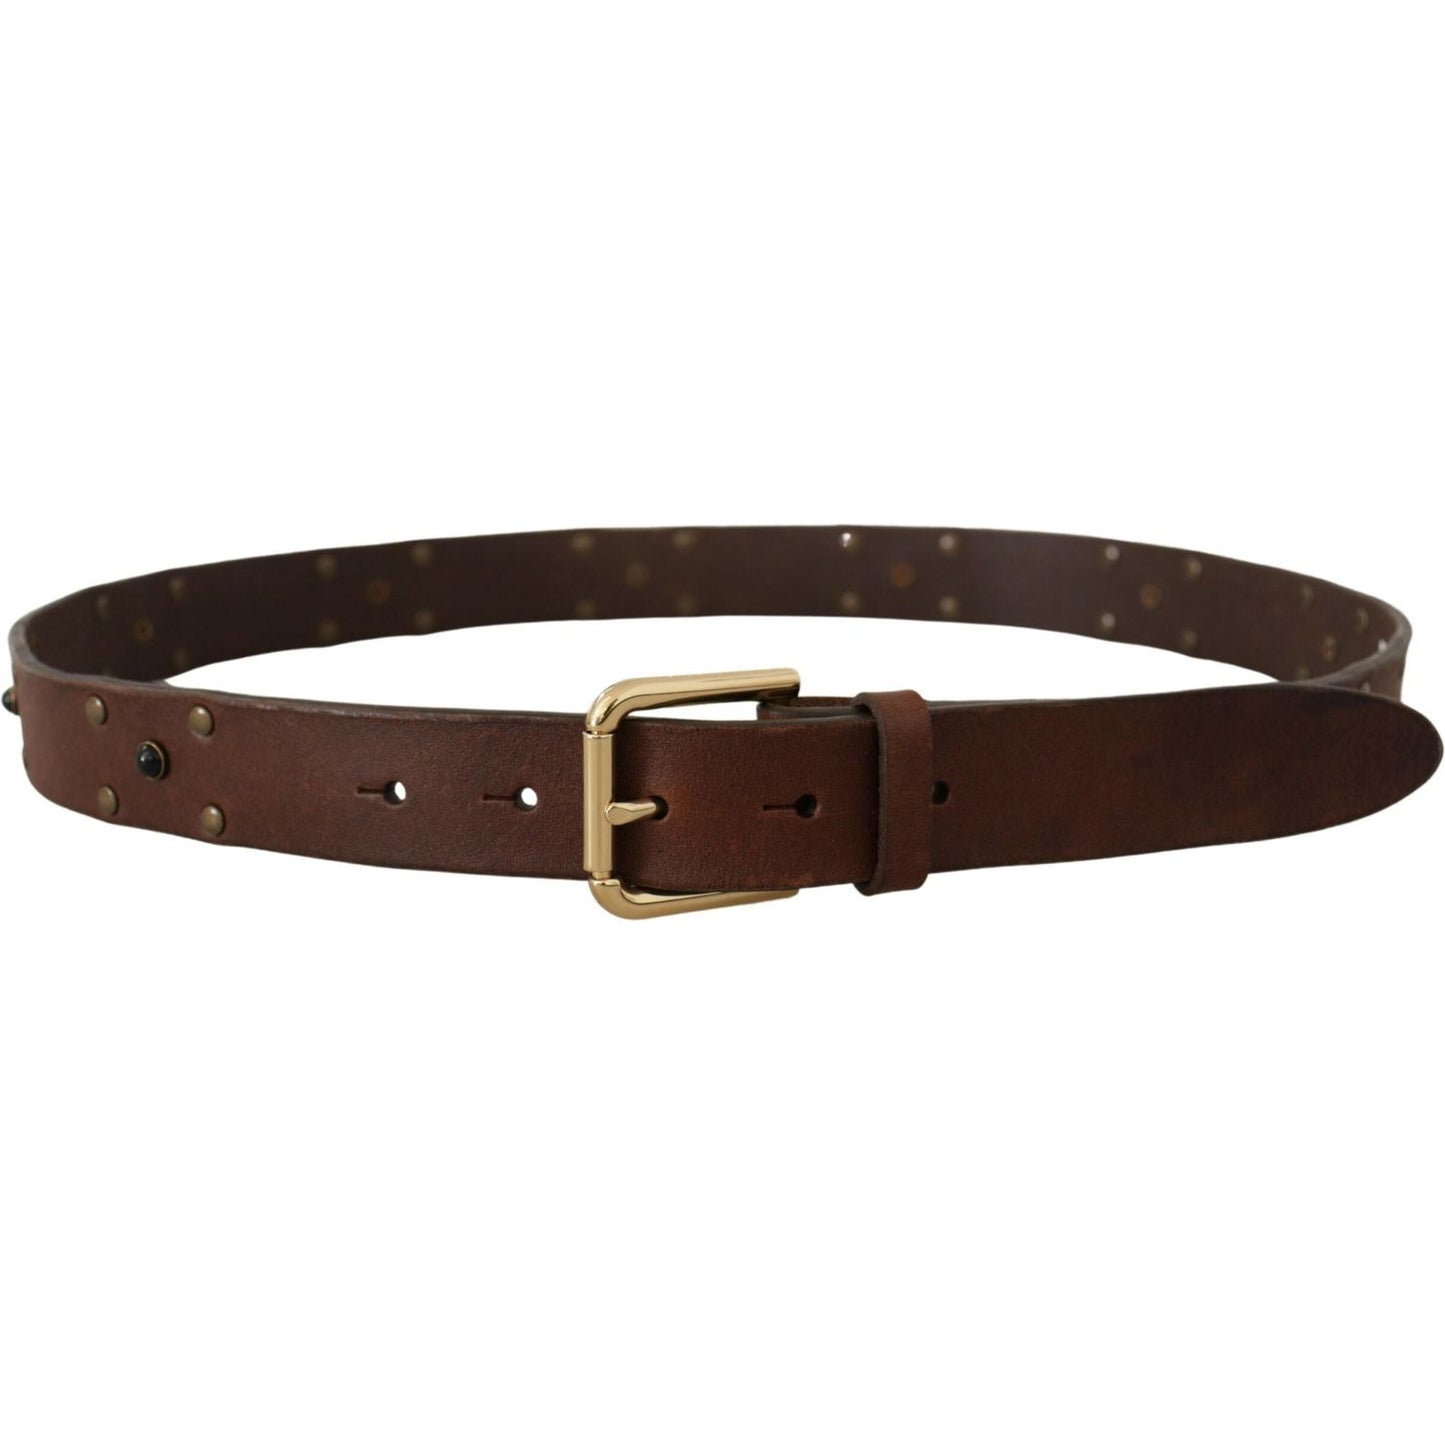 Dolce & Gabbana Elegant Leather Belt with Metal Buckle brown-leather-studded-gold-tone-metal-buckle-belt